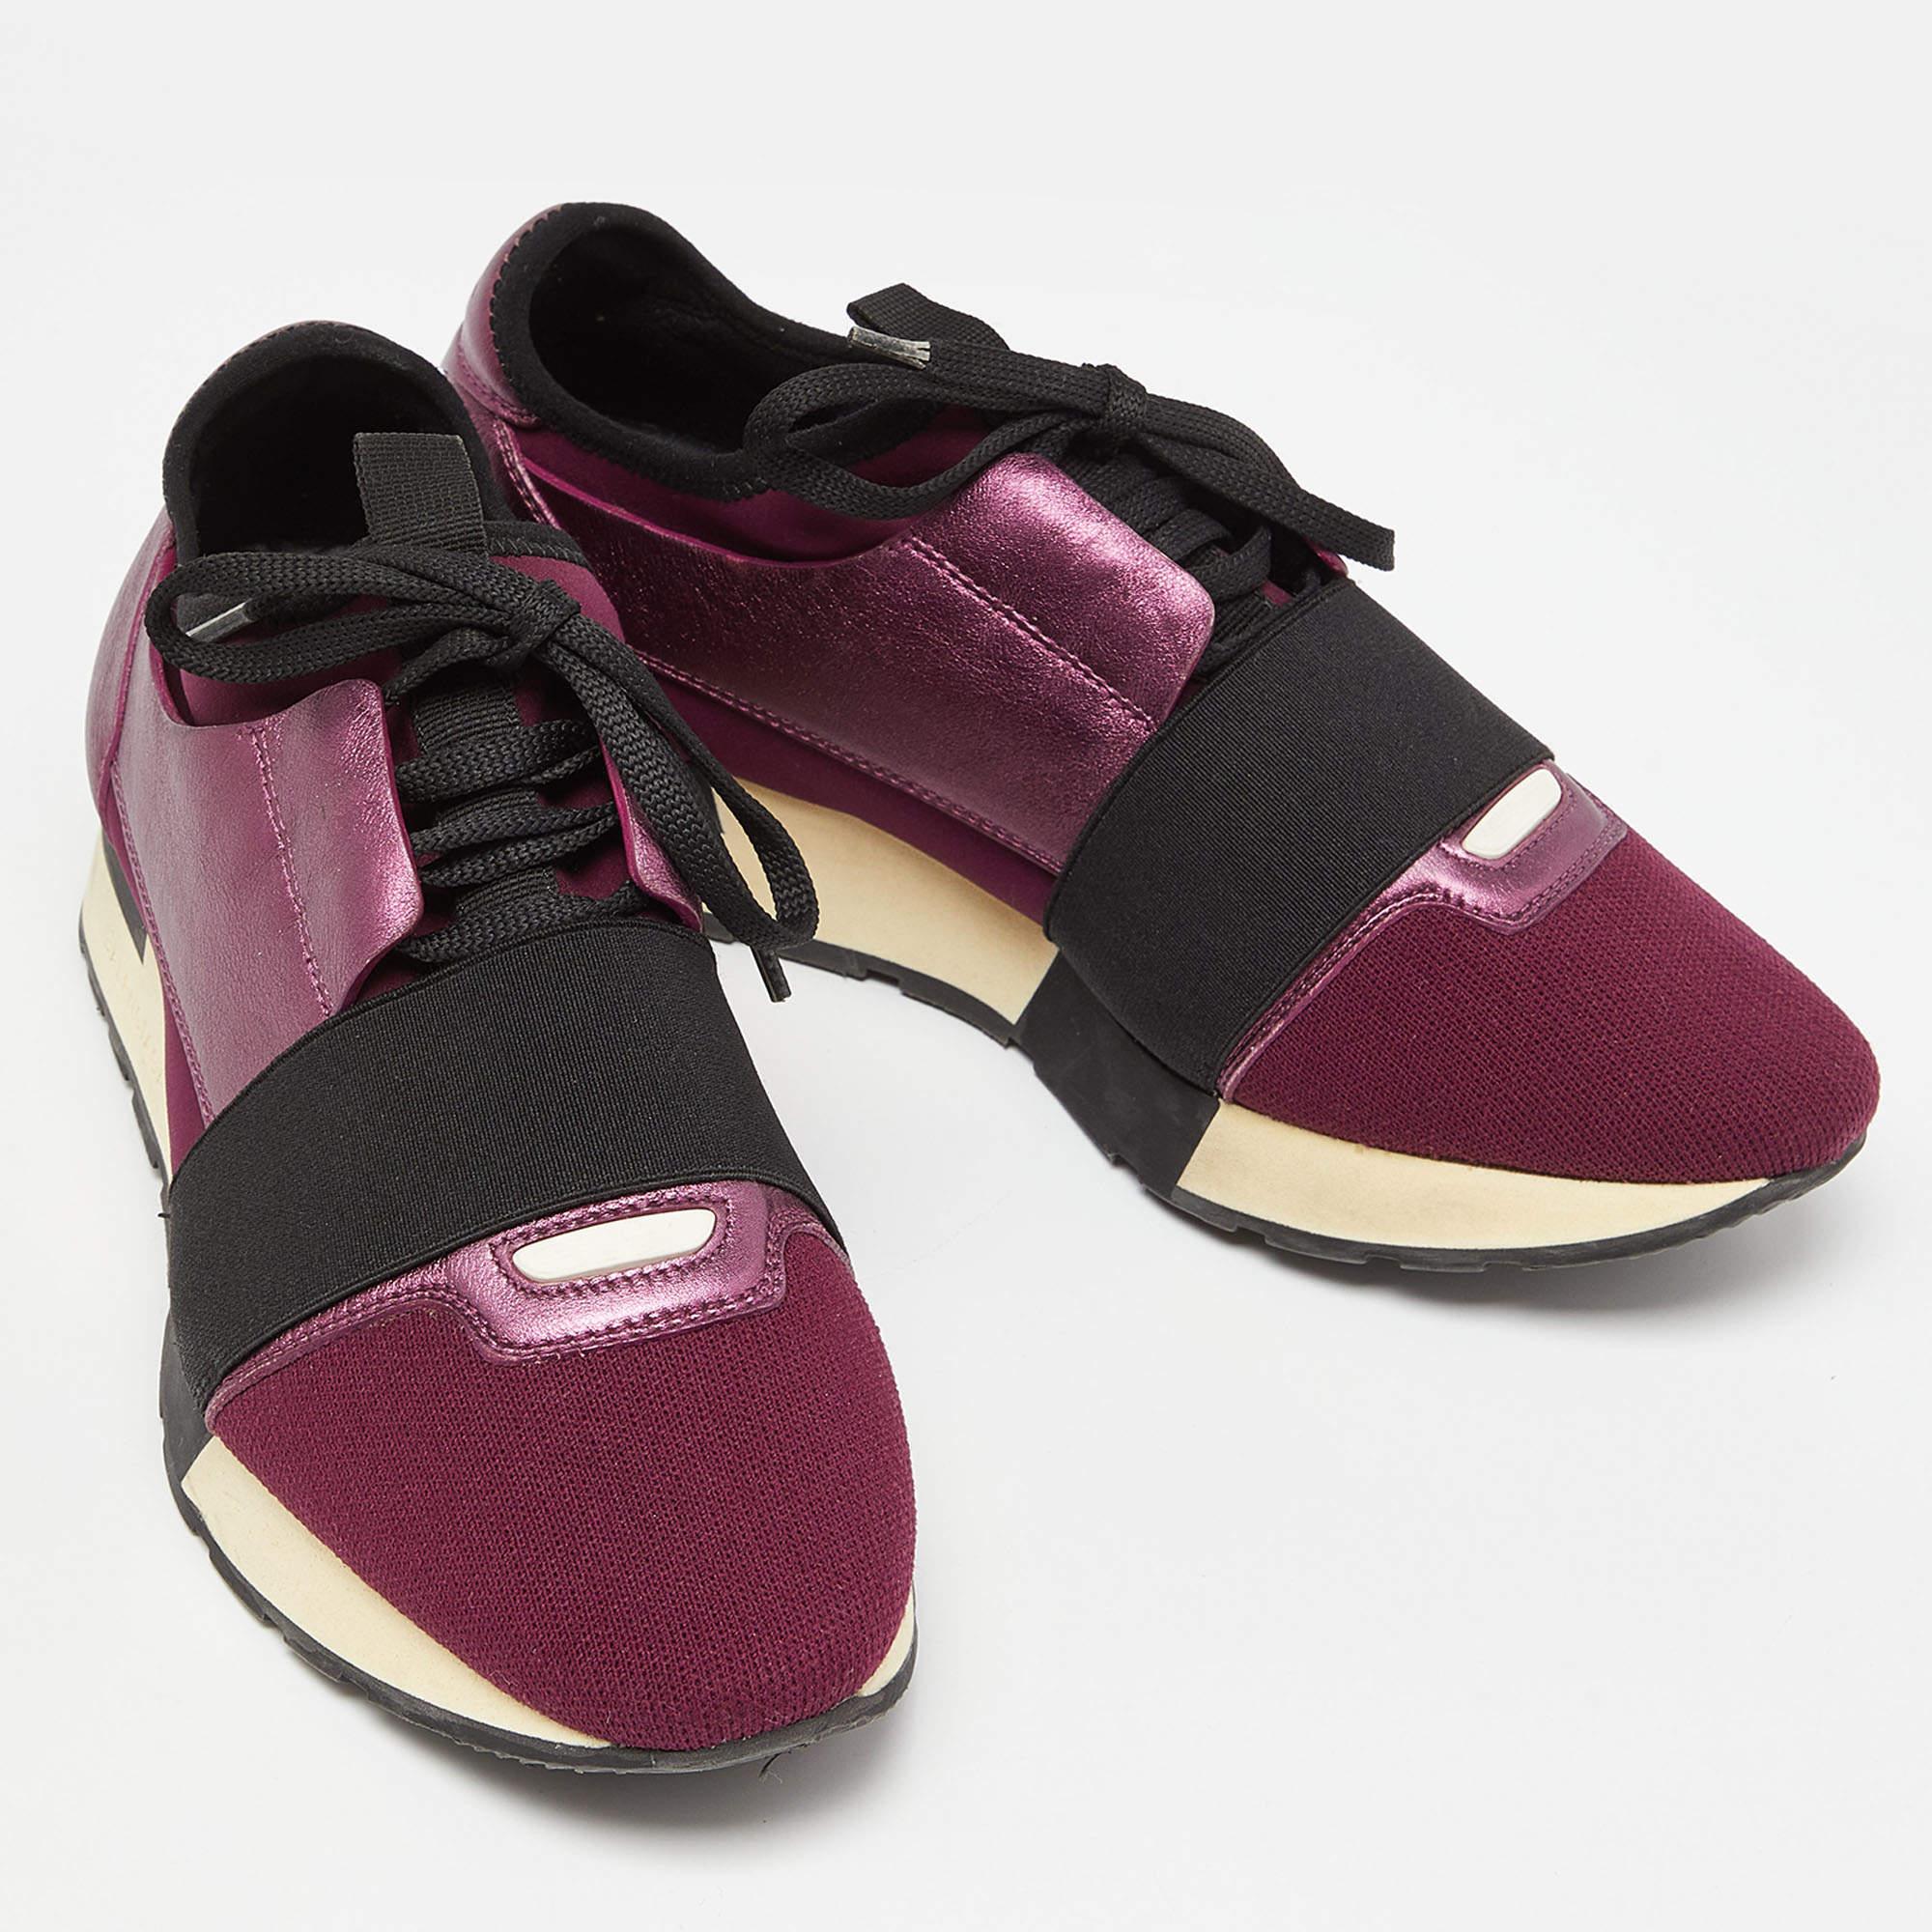 Balenciaga Purple Leather and Neoprene Race Runner Sneakers Size 38 In Good Condition For Sale In Dubai, Al Qouz 2